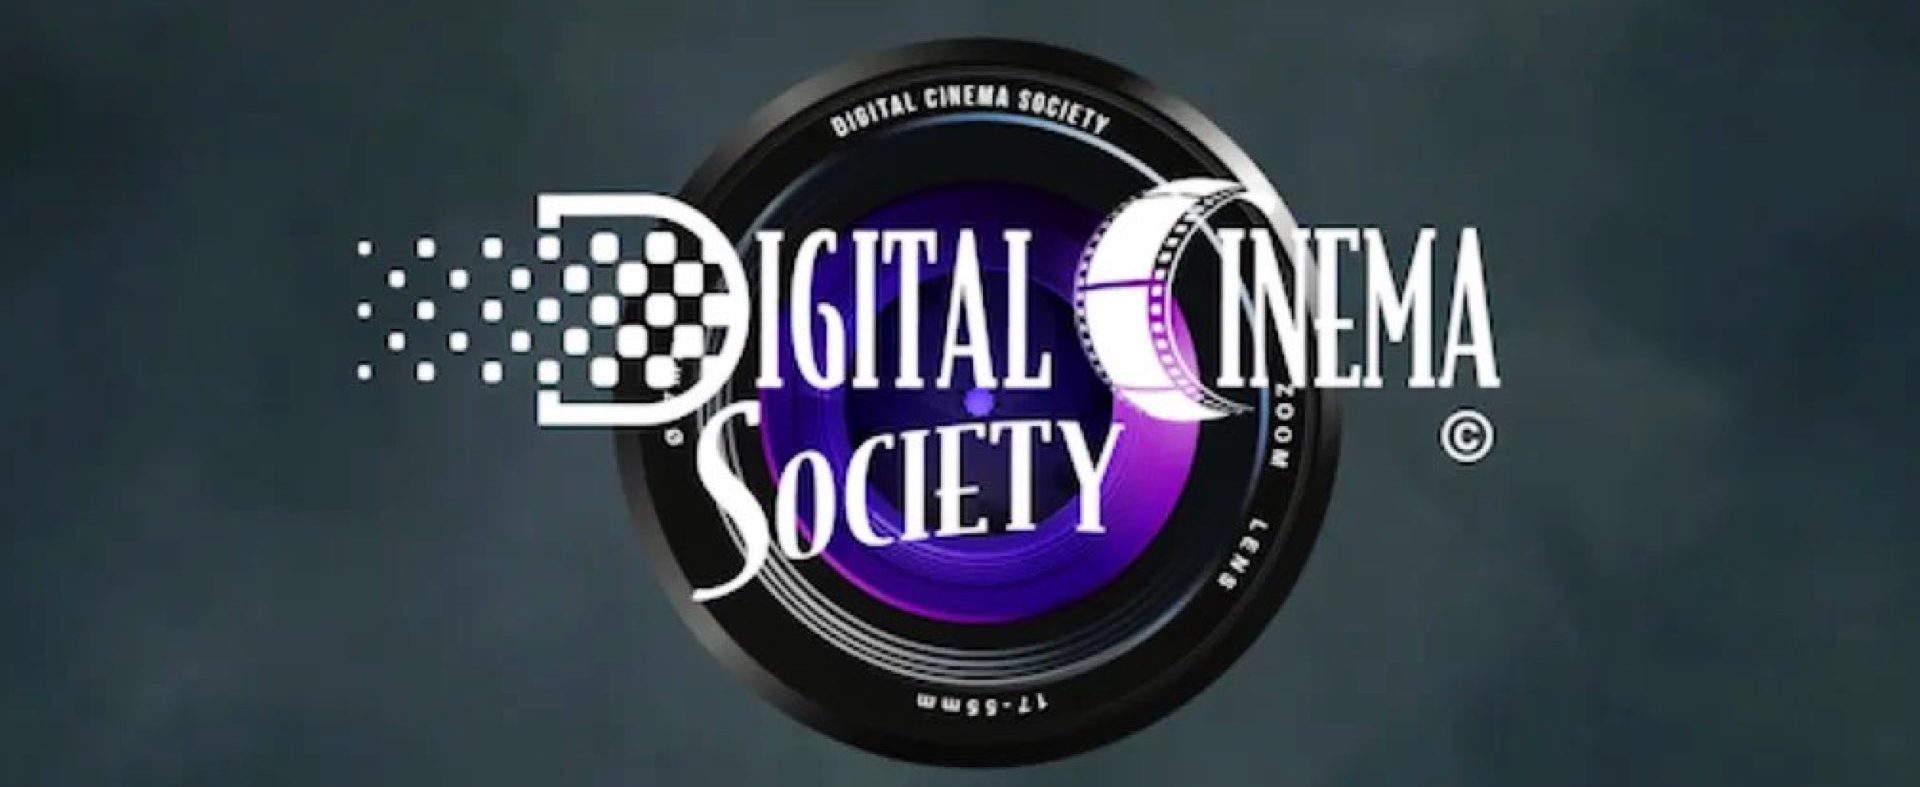 The DCS (Digital Cinema Society)